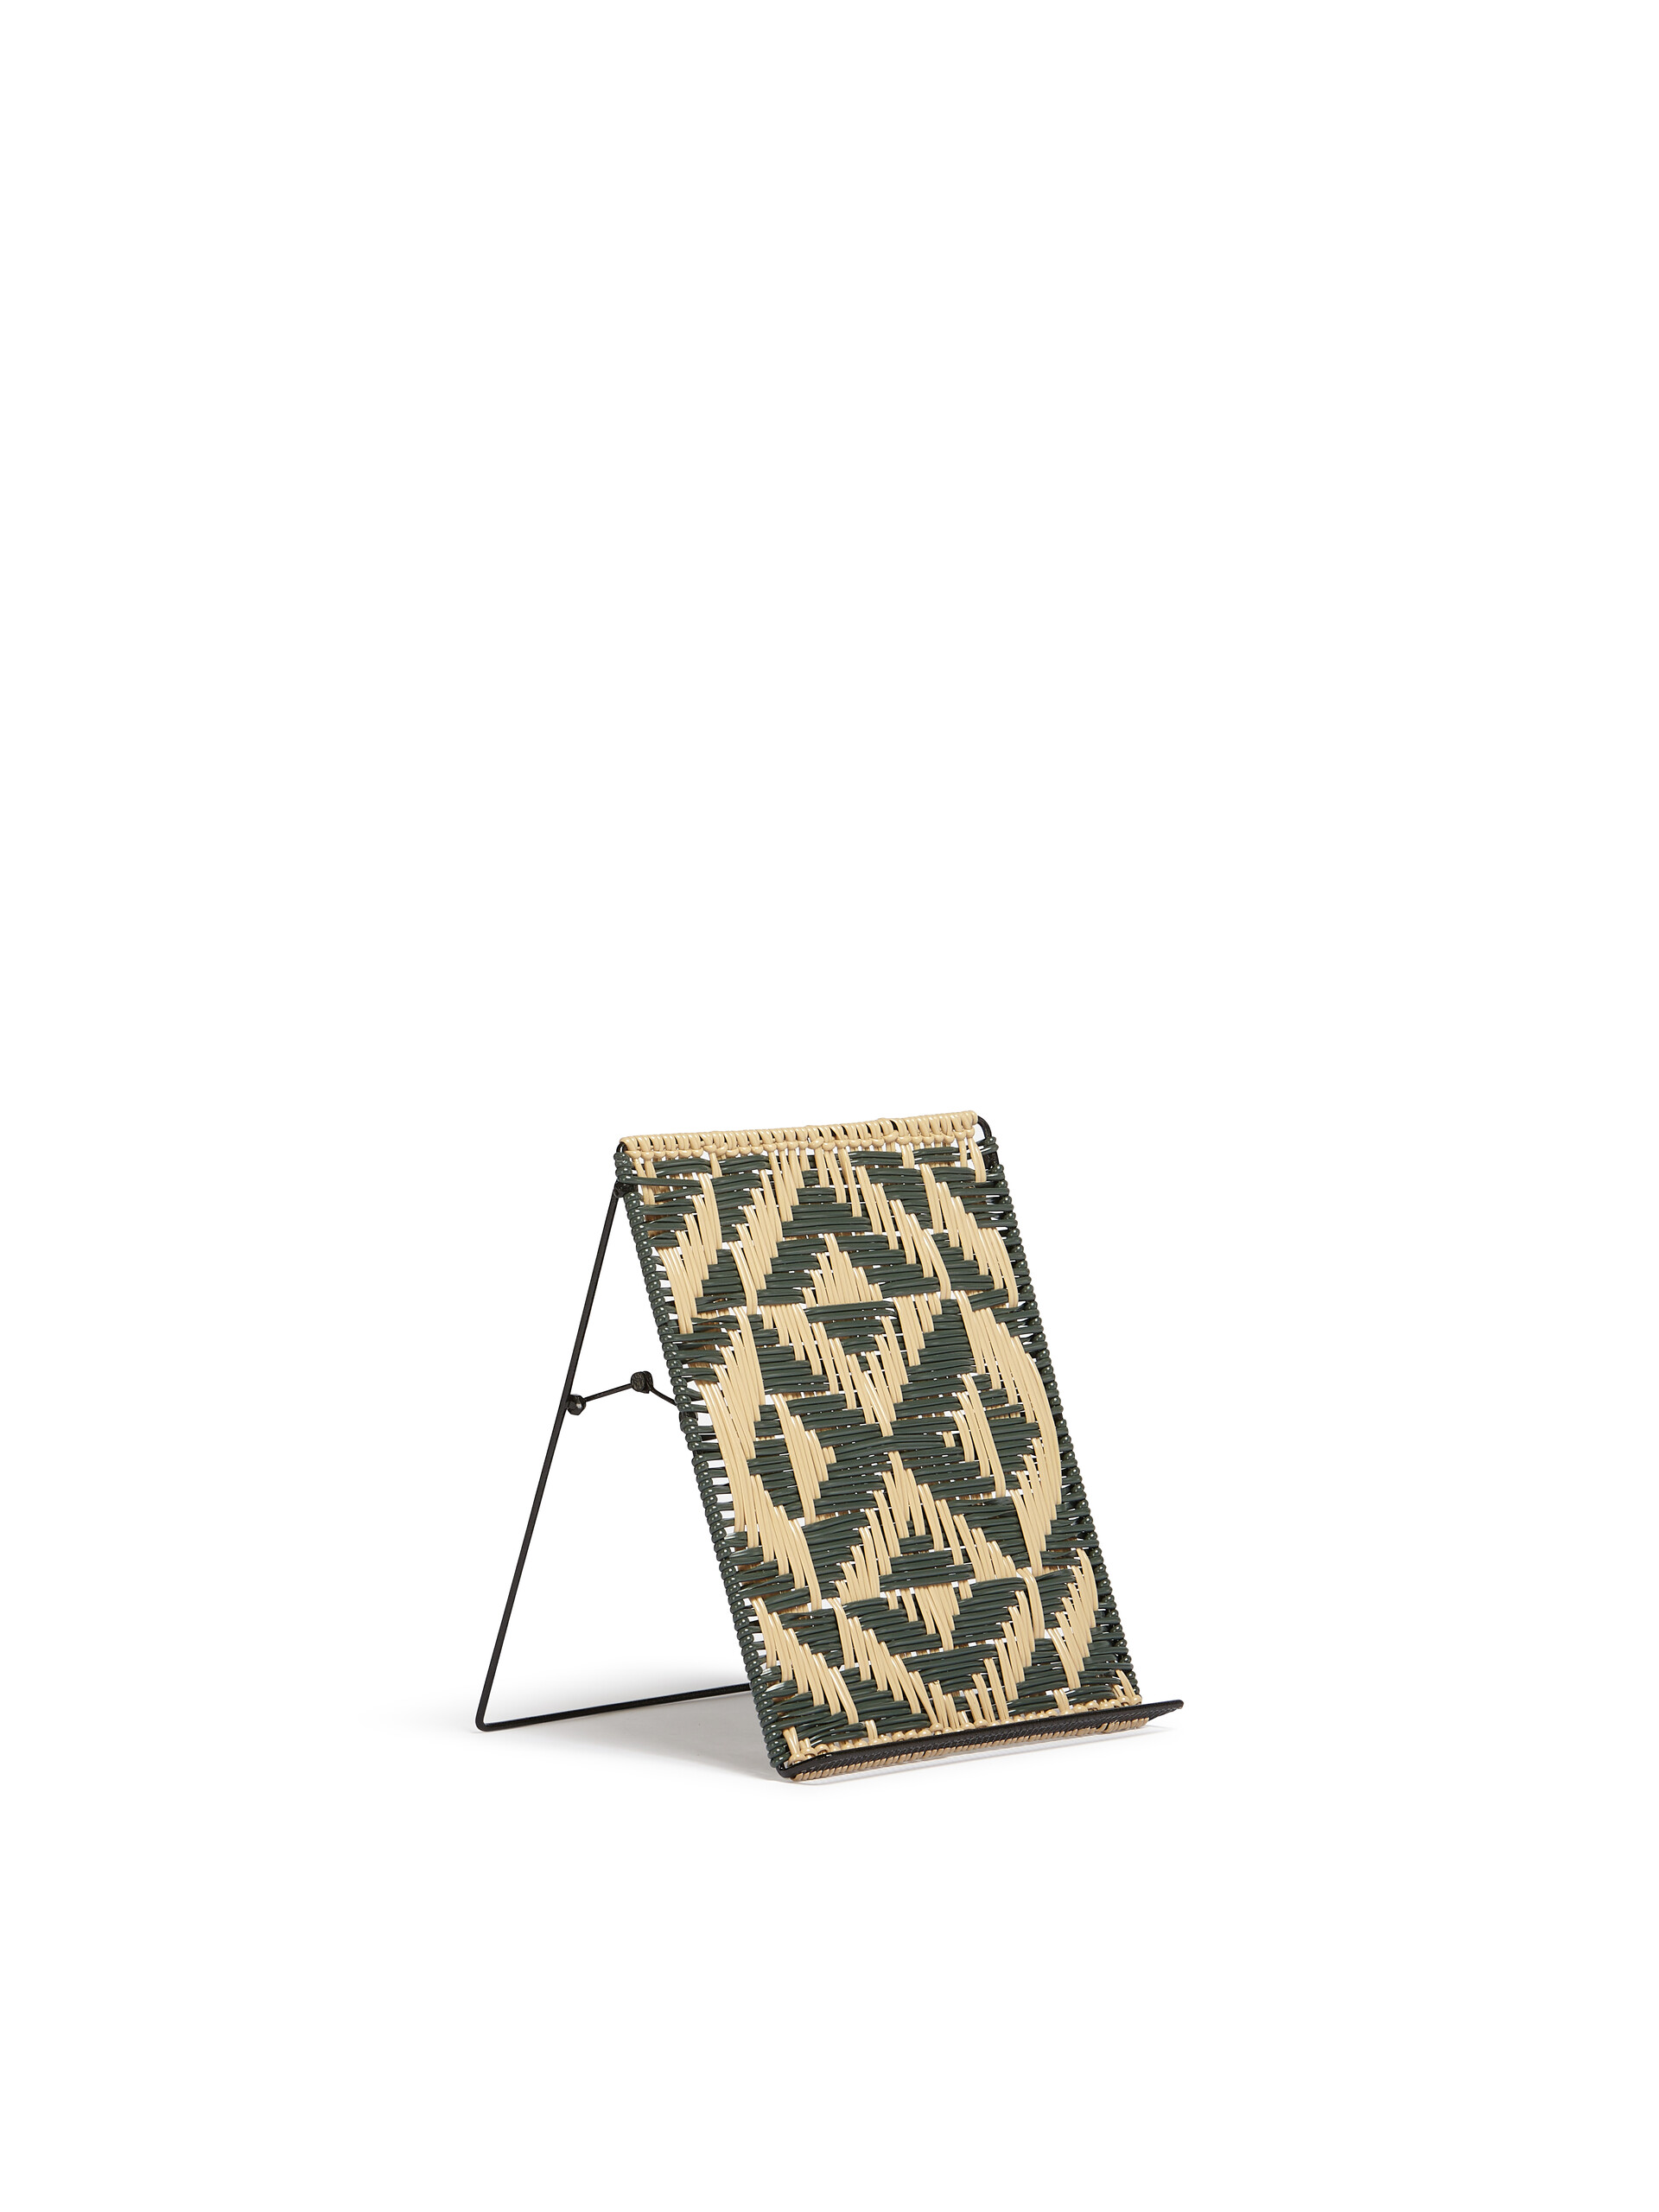 MARNI MARKET beige and black woven iPad stand - Furniture - Image 2